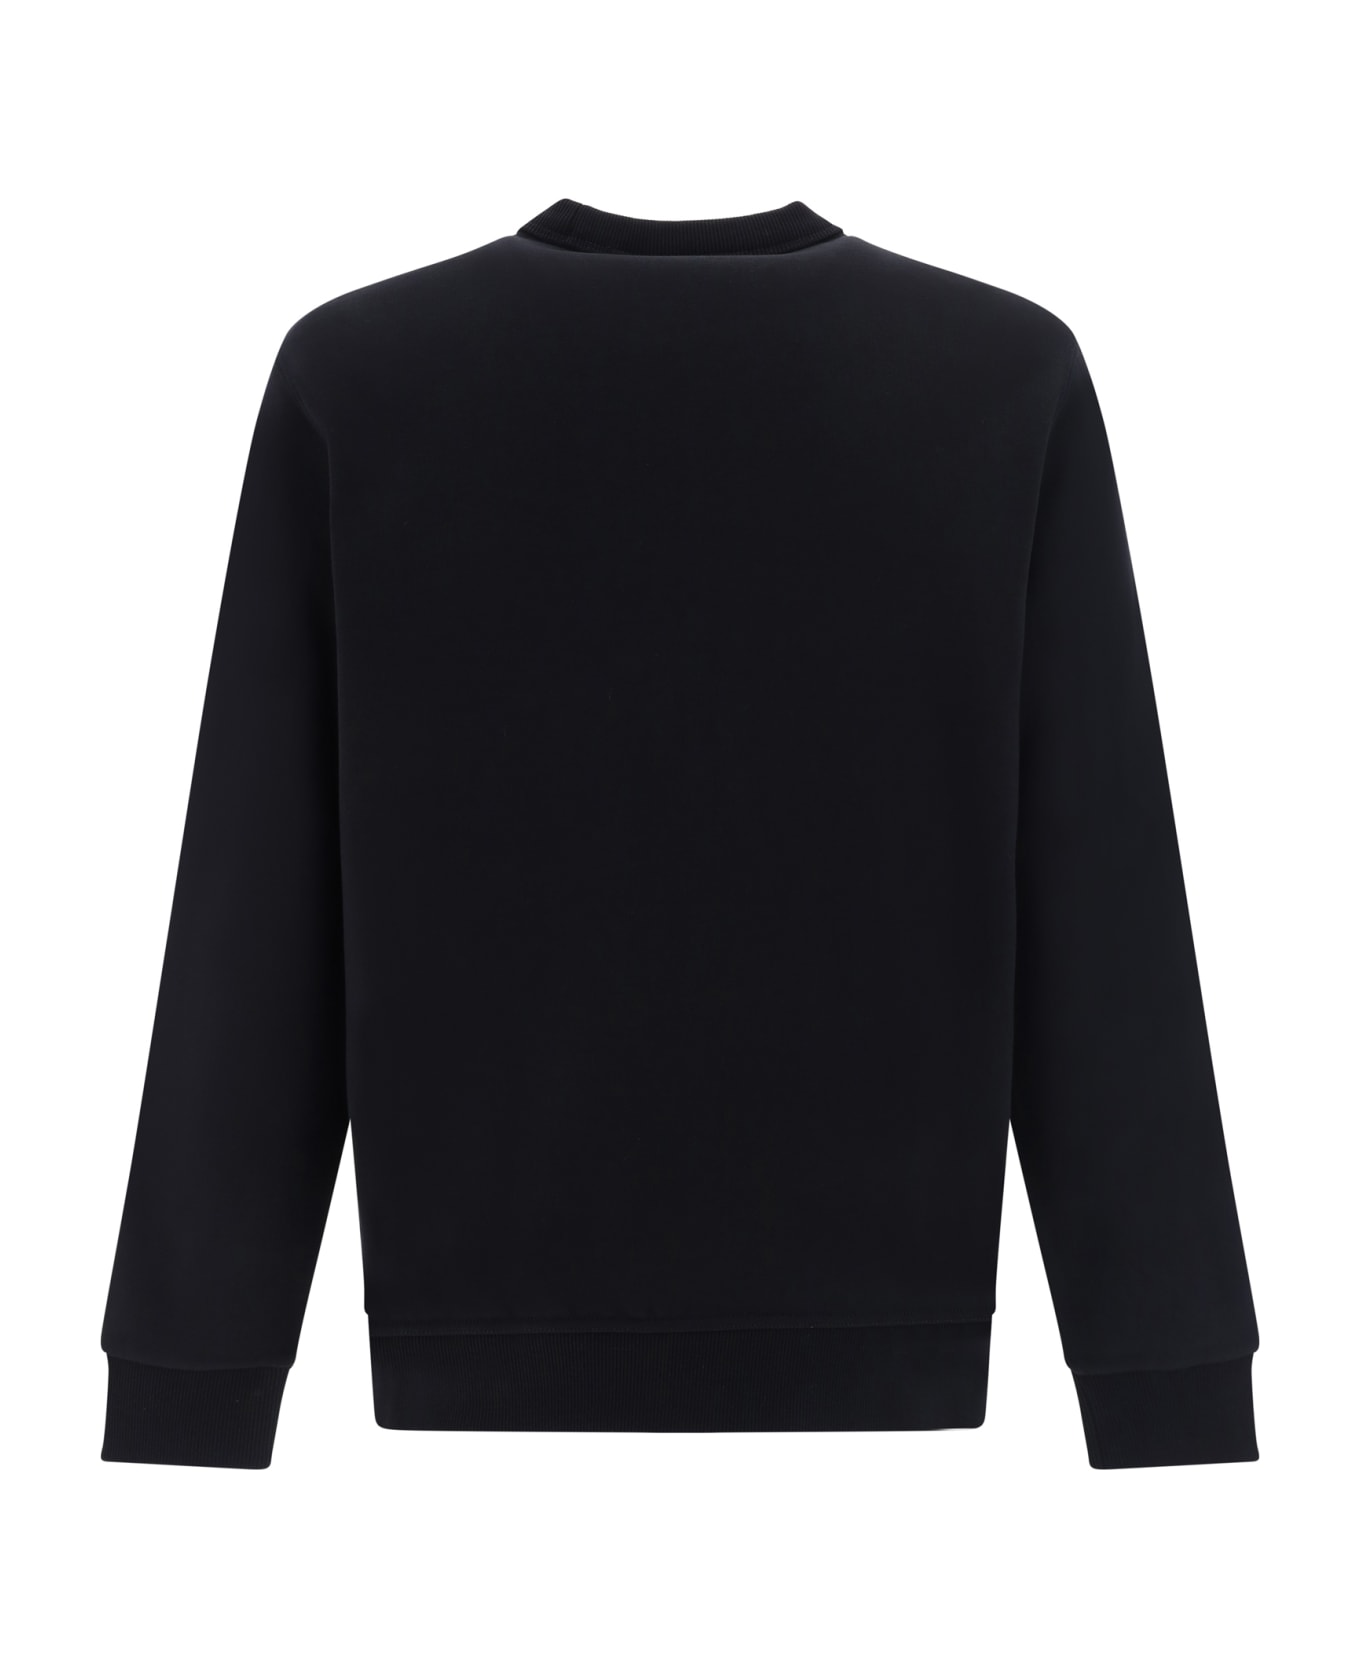 Burberry Sweatshirt - Black フリース